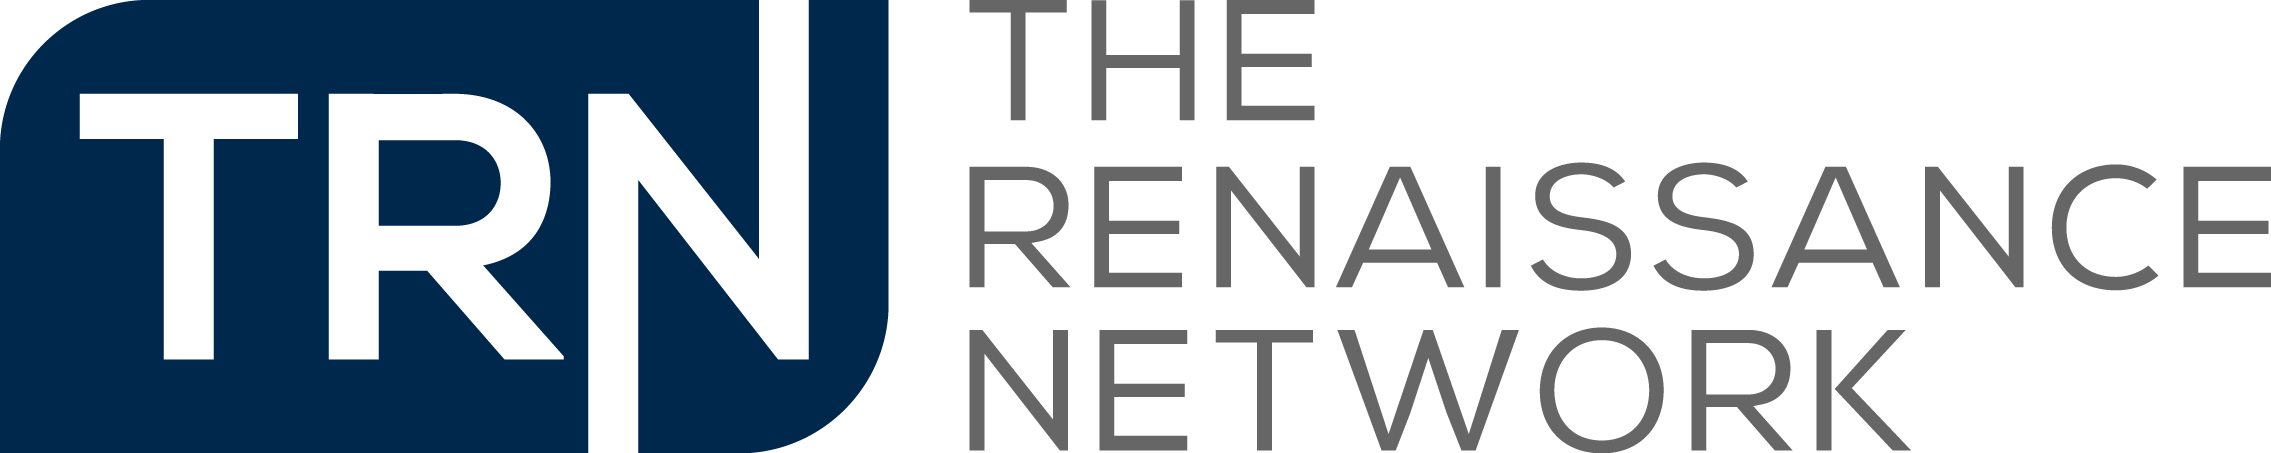 The Renaissance Network